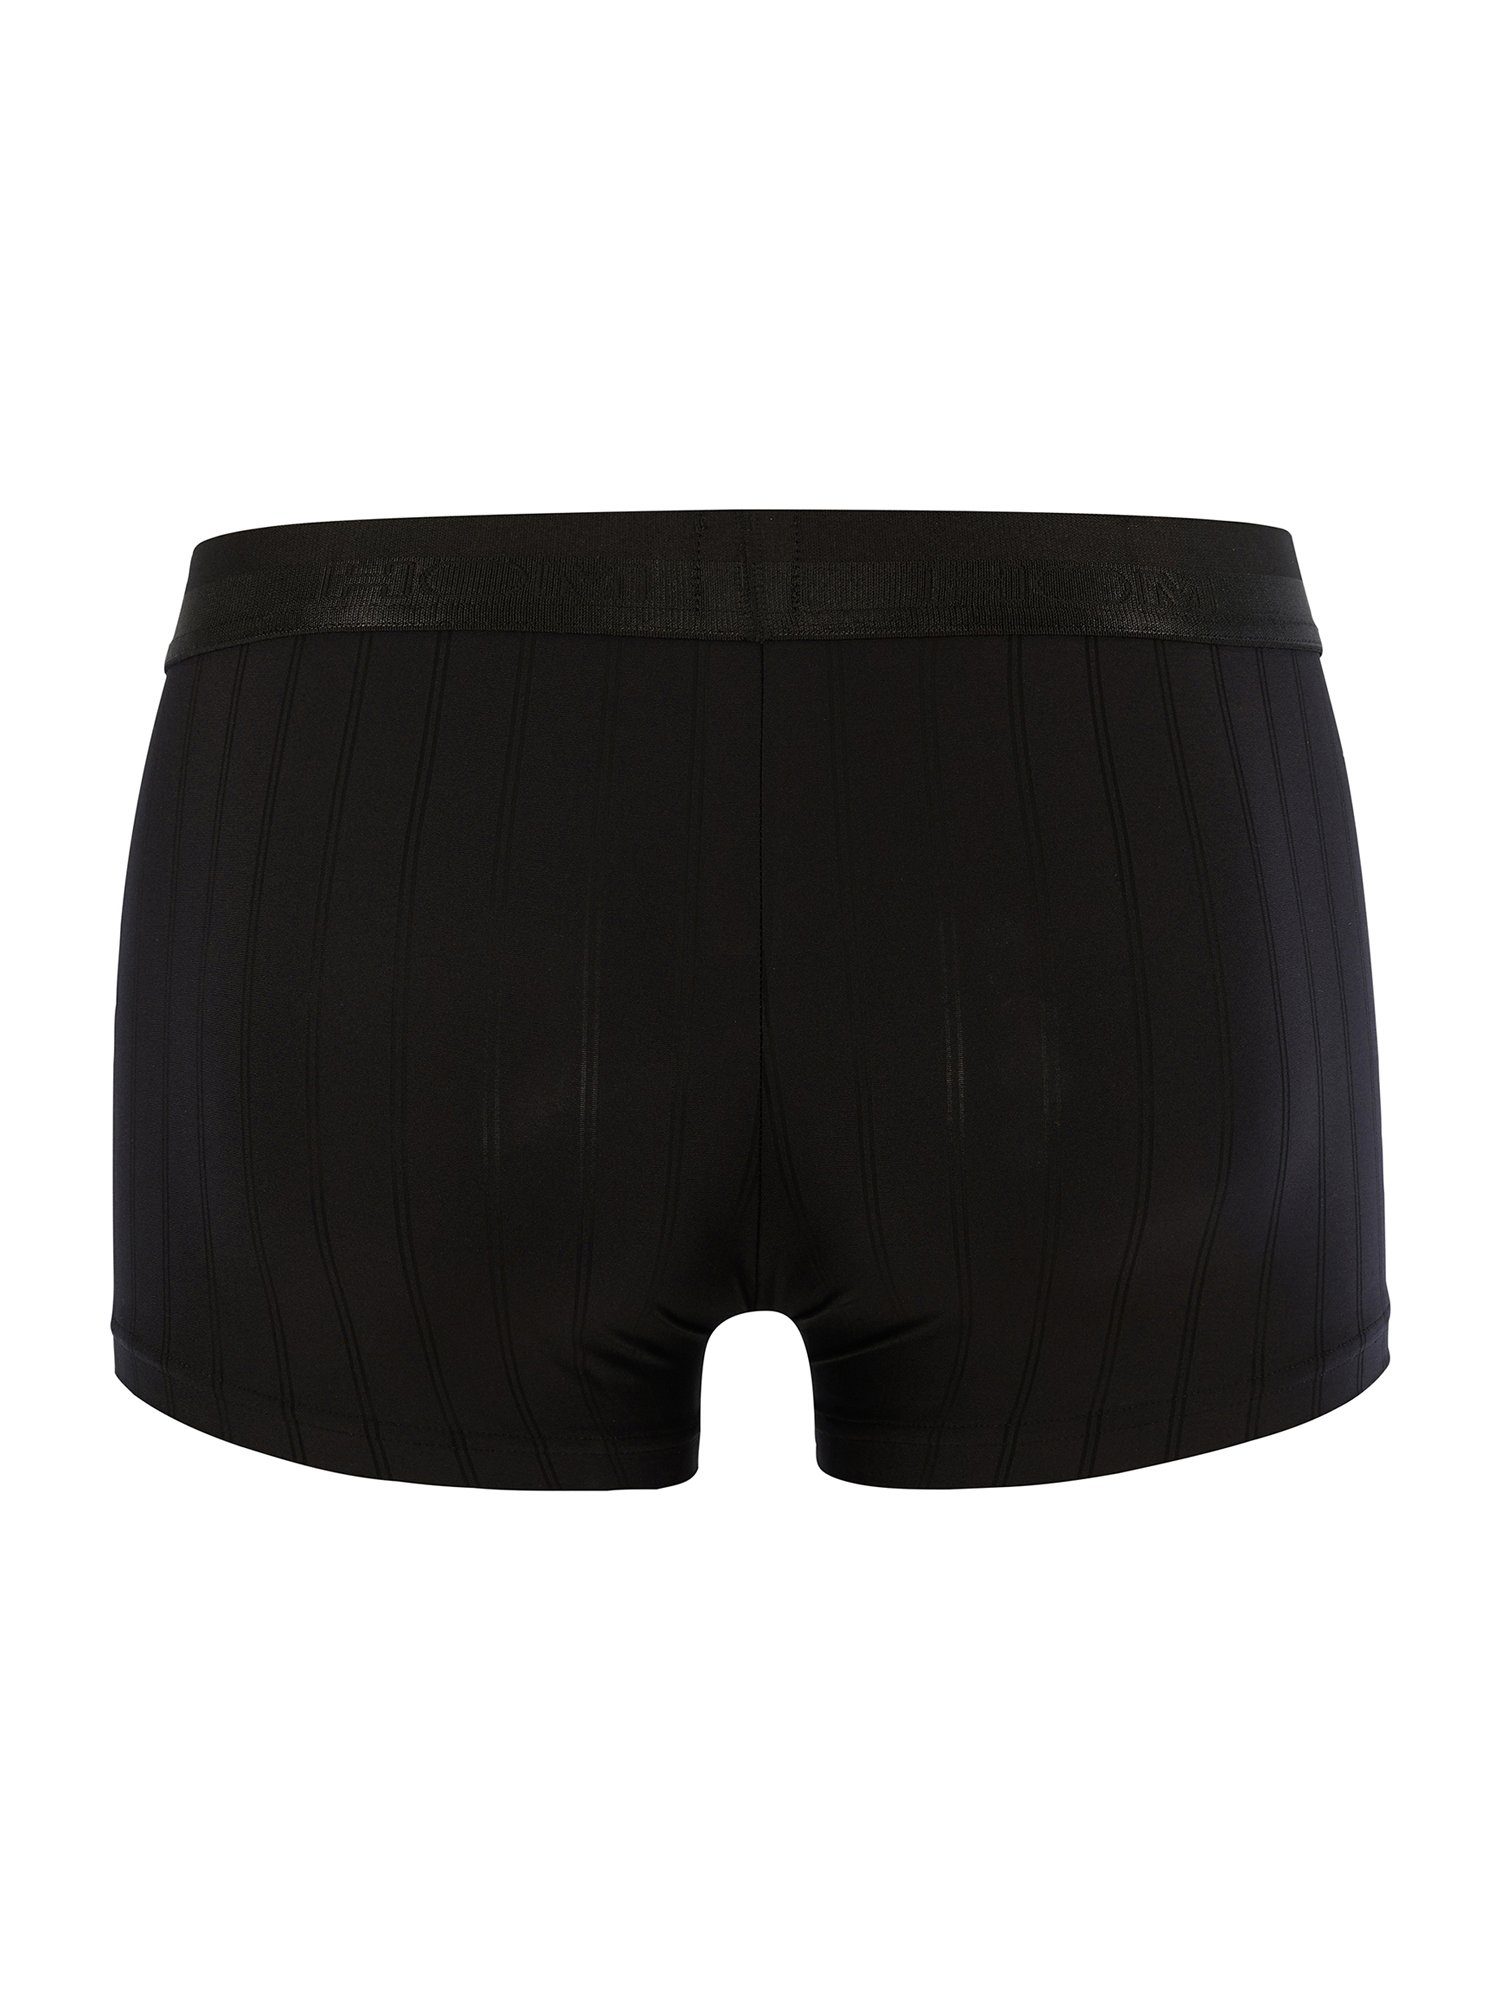 Pants Briefs Boxer black Hom Chic Comfort Retro